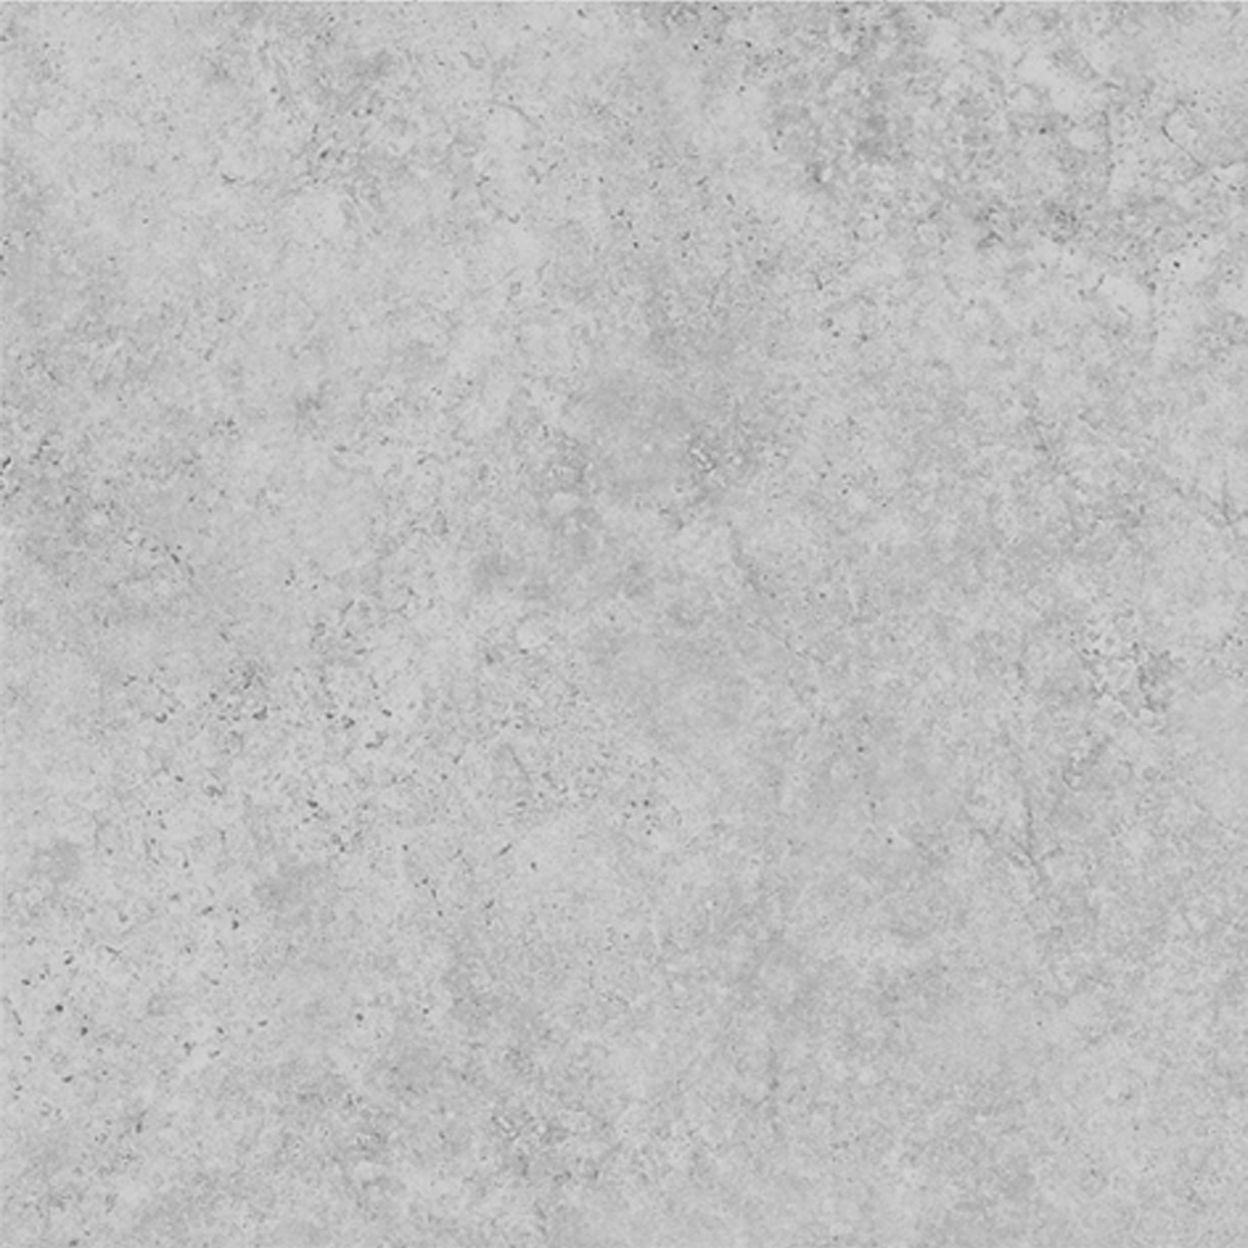 фото Керамогранит керамин тоскана 2п серый 400x400x8 мм (11 шт.=1,76 кв.м)